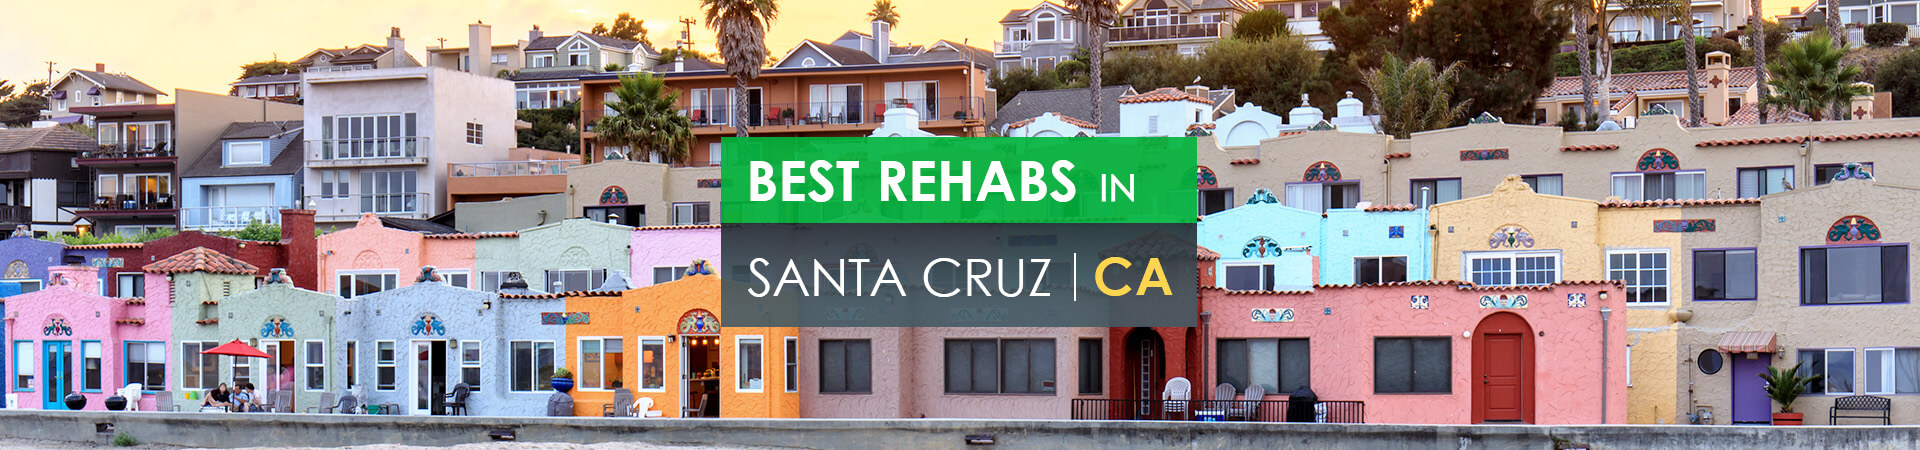 Best rehabs in Santa Cruz, CA